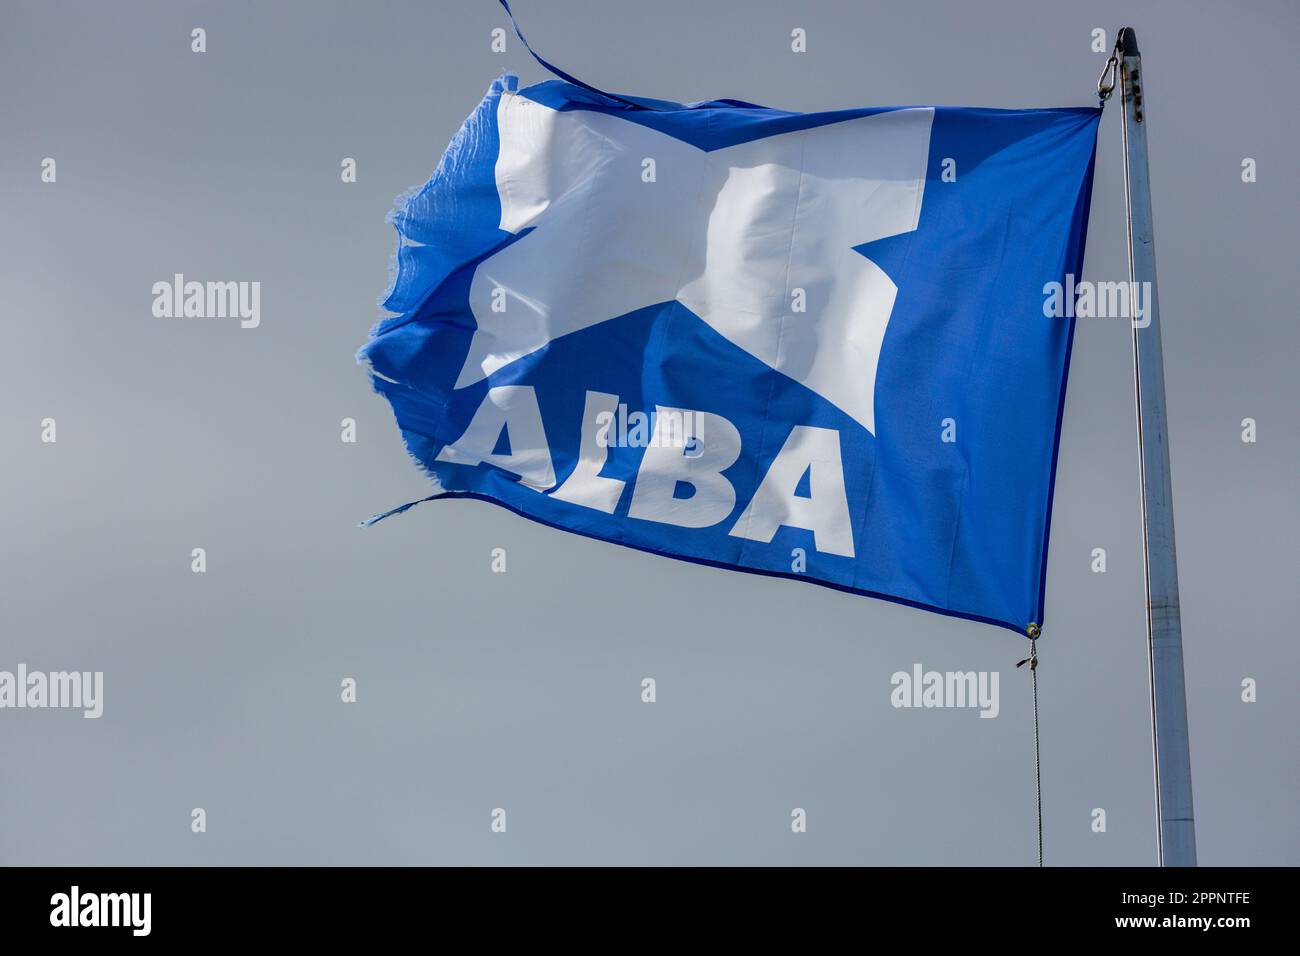 Scottish Alba Party flag flying against a grey sky Stock Photo